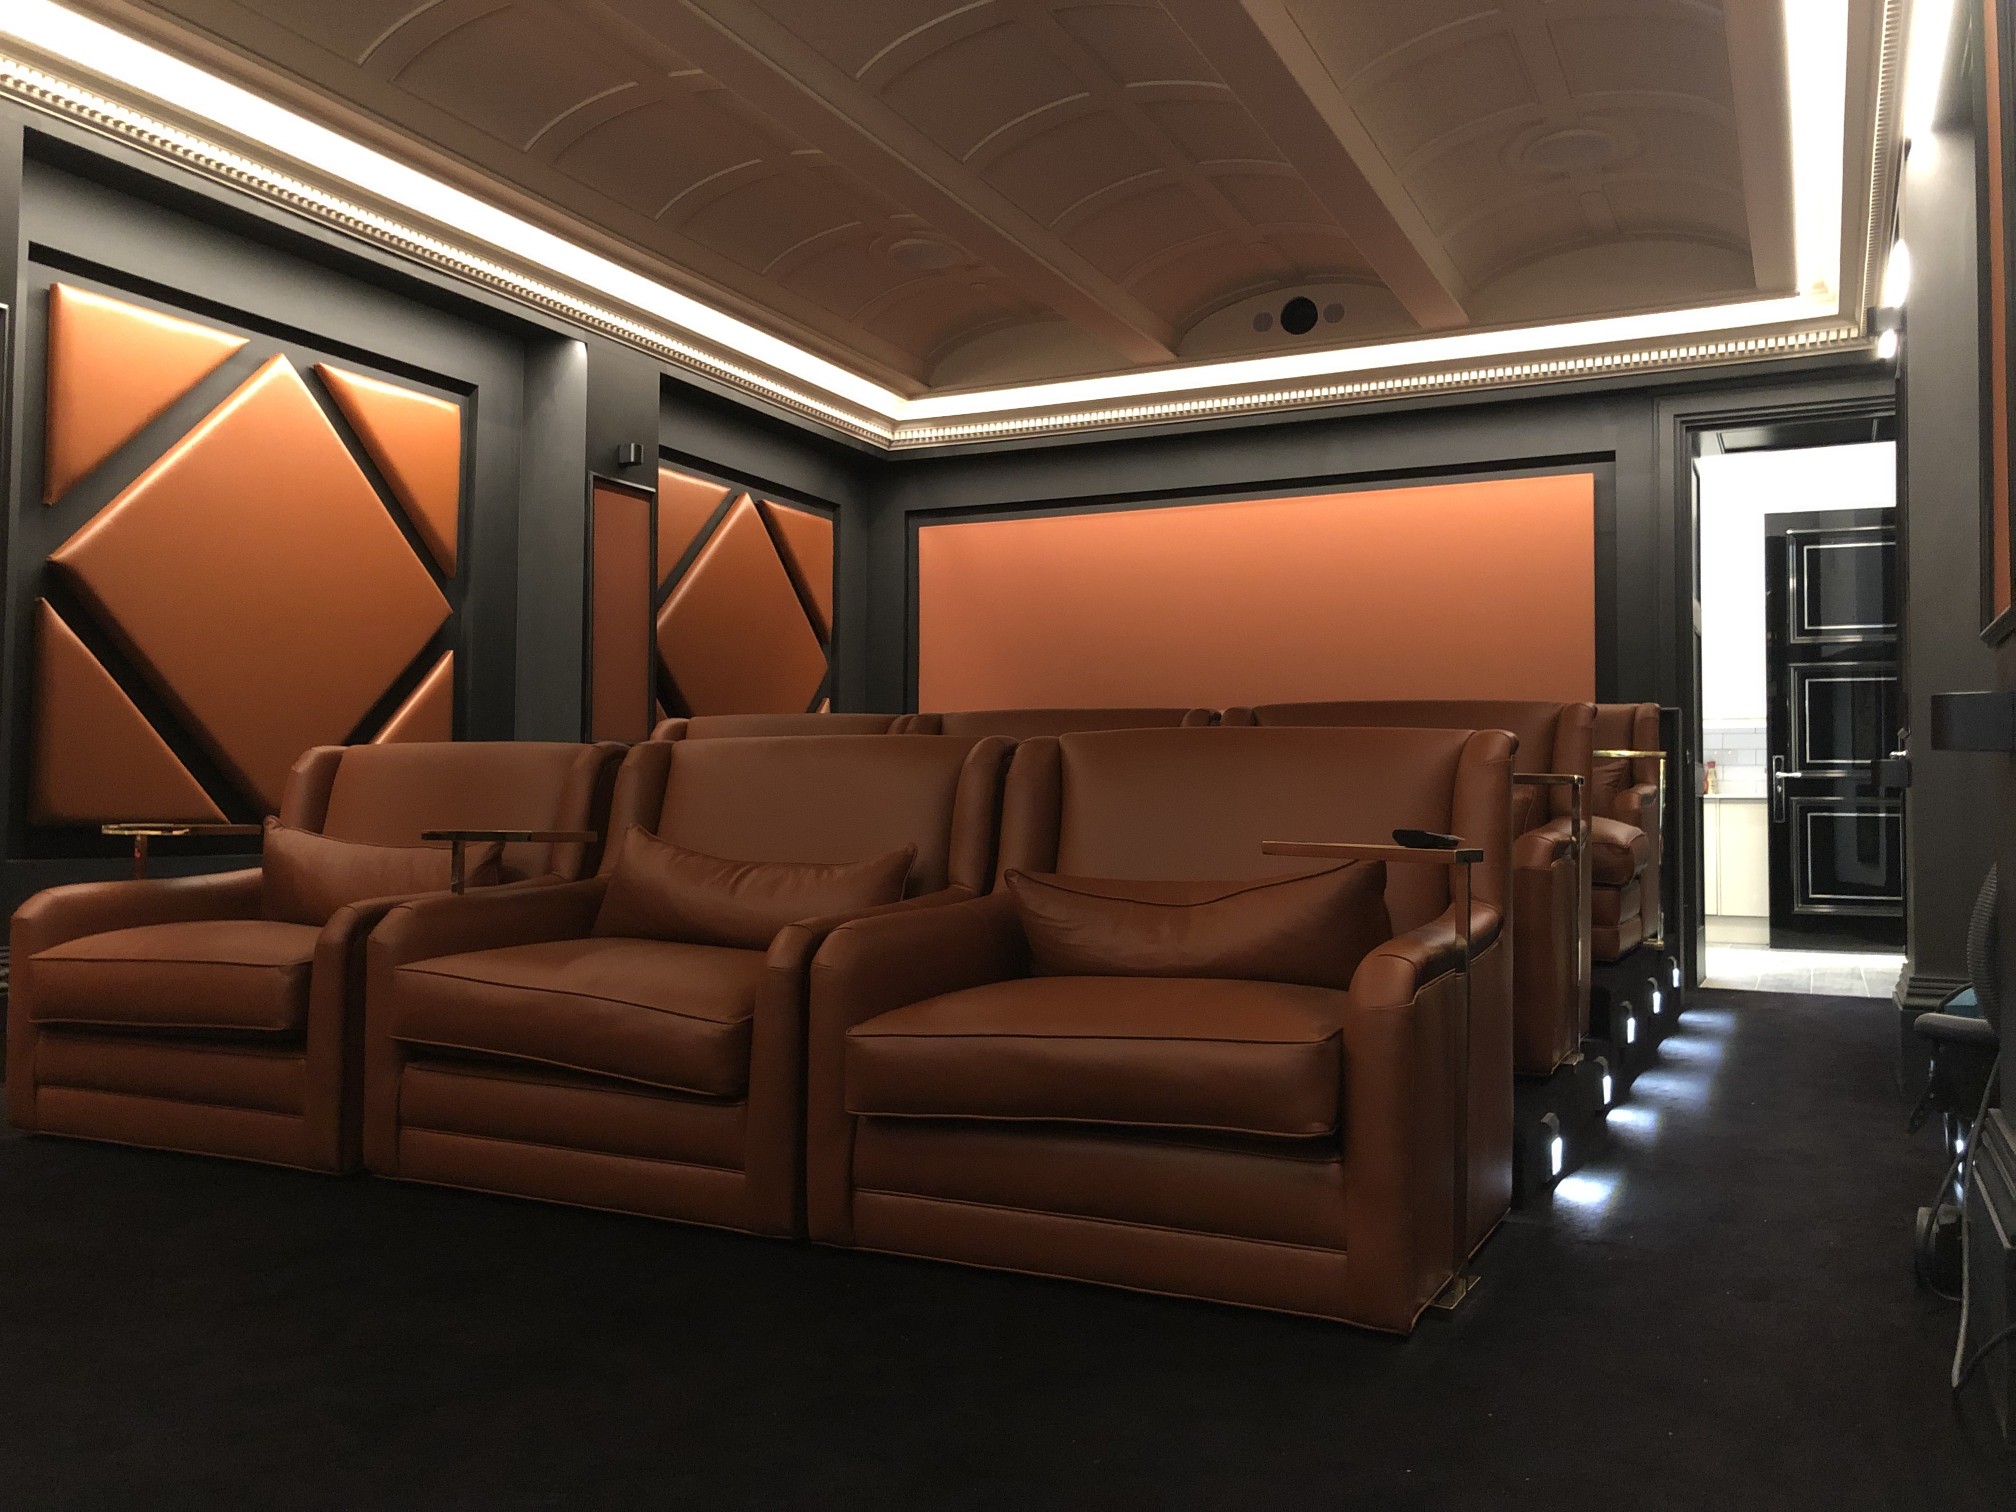 Home Cinema room showcasing lighting, projector and cinema chairs